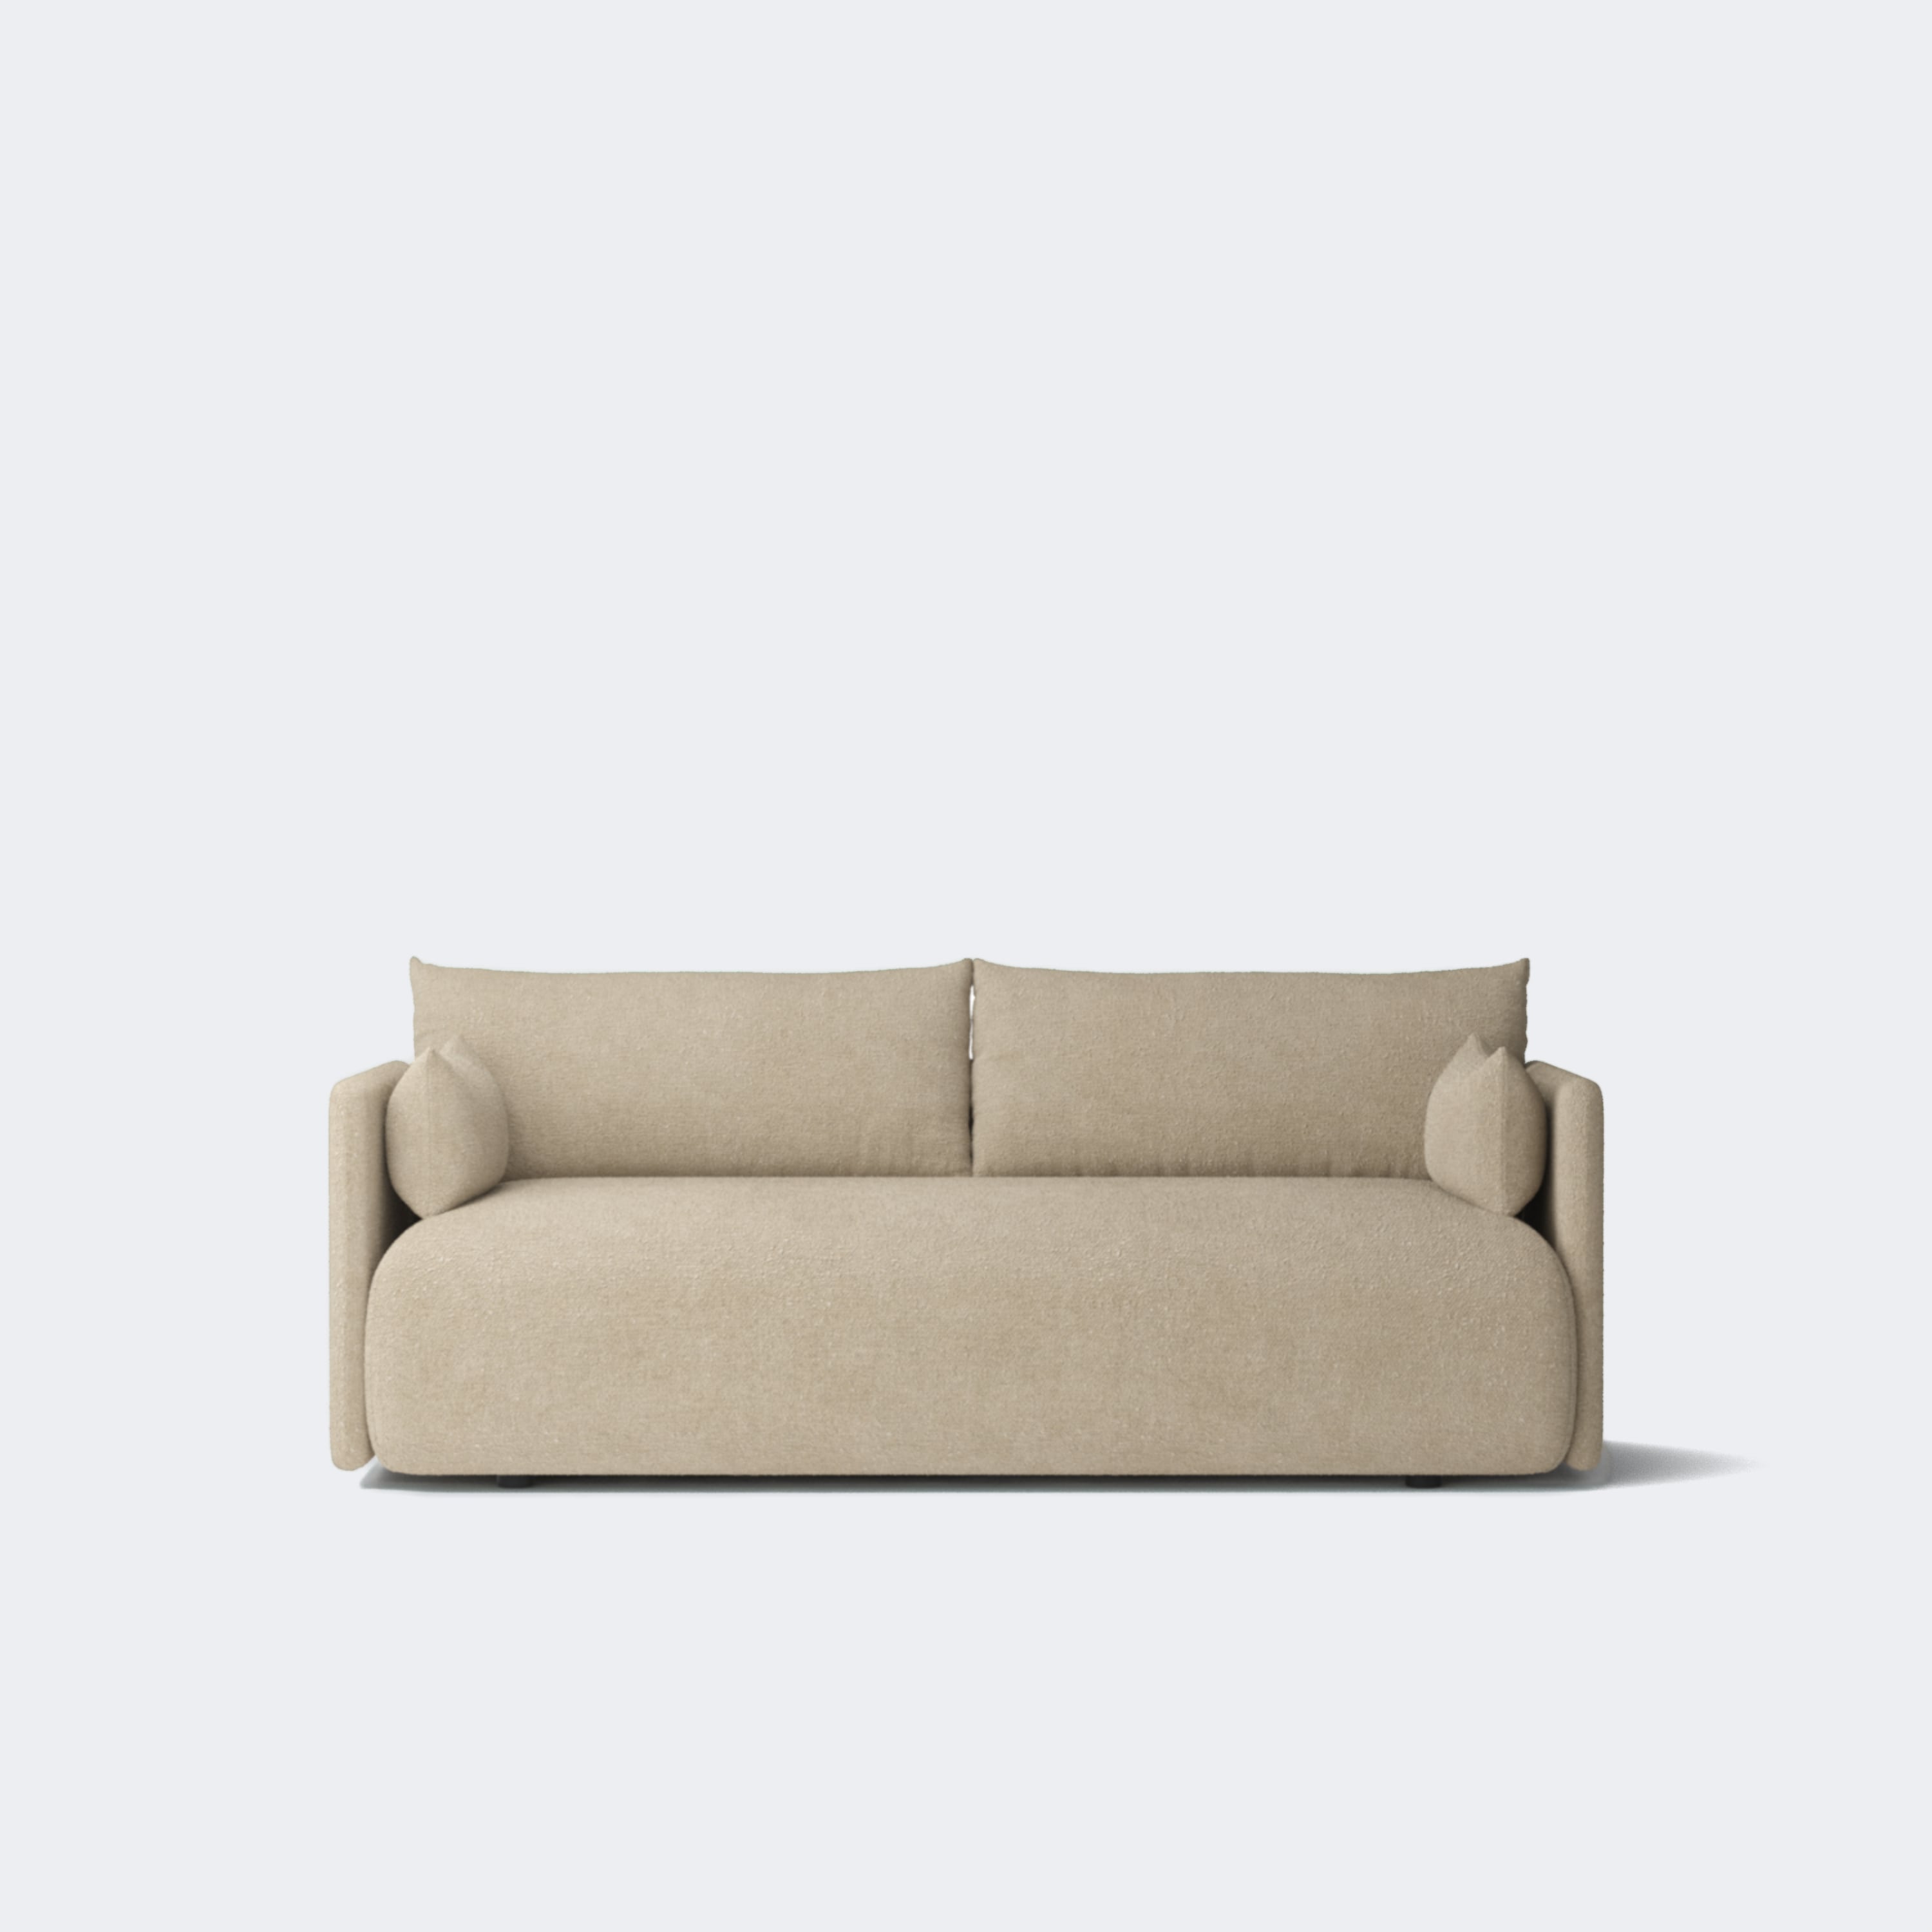 Audo Copenhagen Offset Sofa, 2 Seater Made To Order (12-14 Weeks) Audo Boucle #02 (Beige) - KANSO